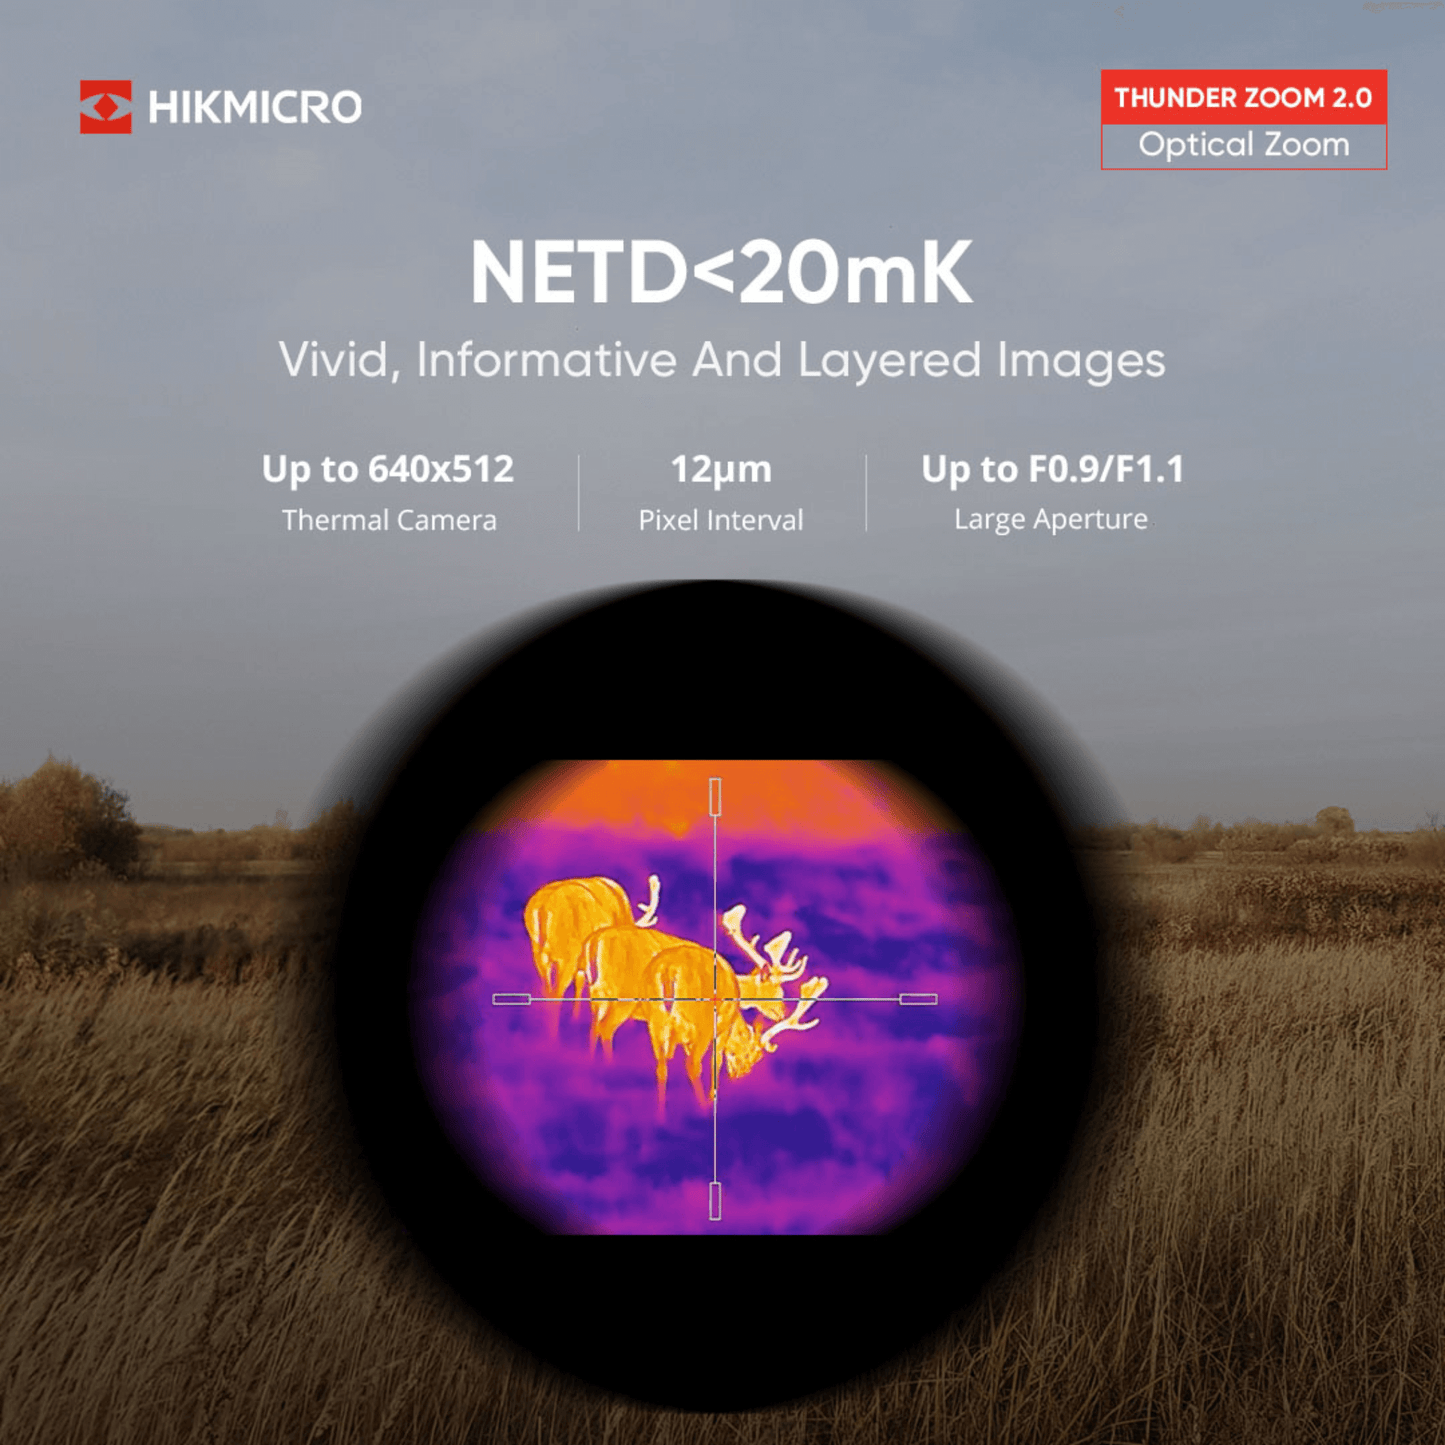 HikMicro Thunder Zoom TQ60Z 2.0 20mK NETD provides vivid imagery